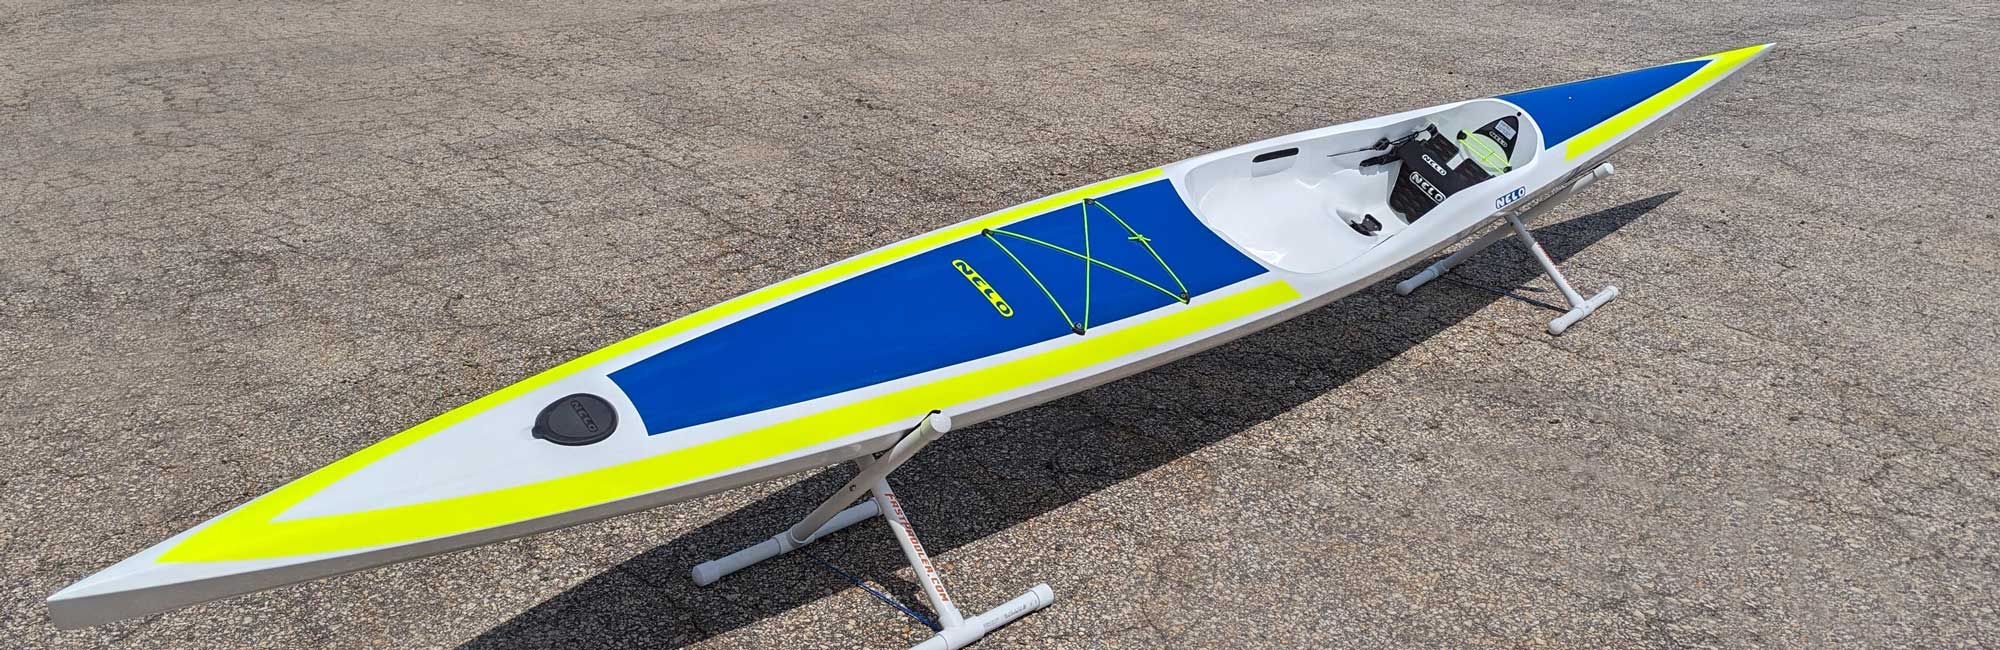 Nelo 540 Surfski for sale, ML size, WWR construction